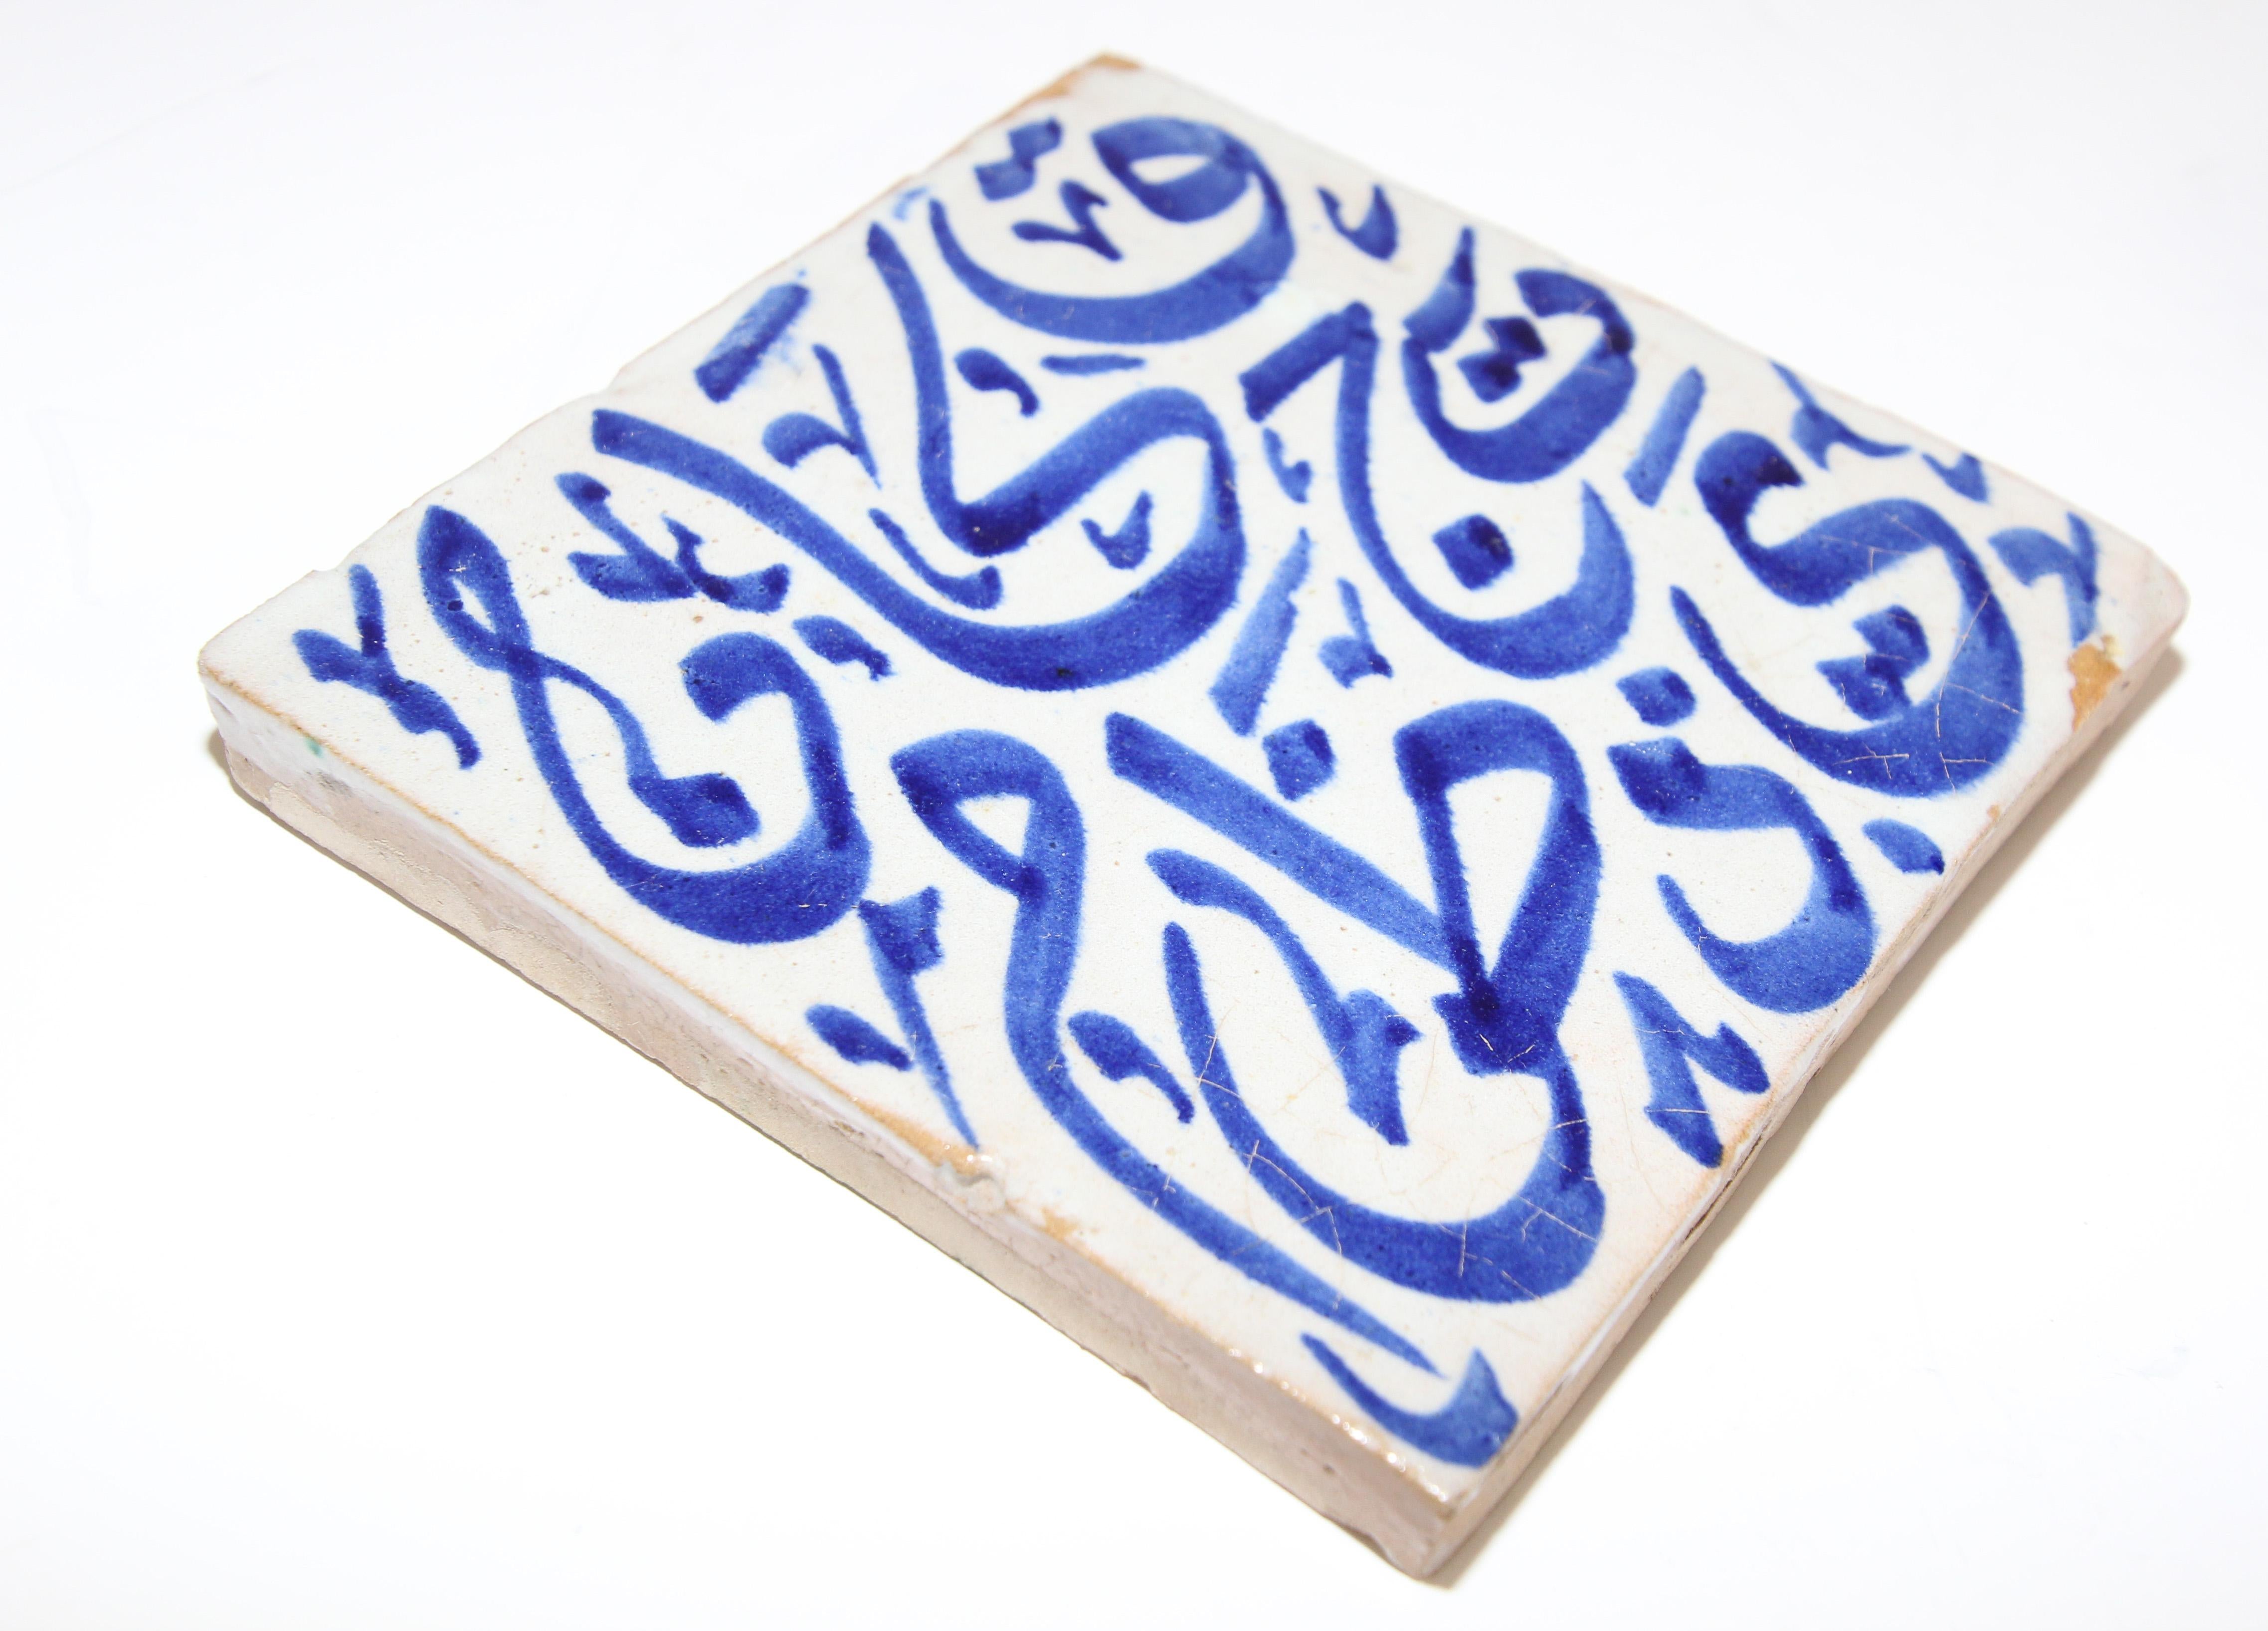 Moorish Tile with Blue Arabic Writing 4